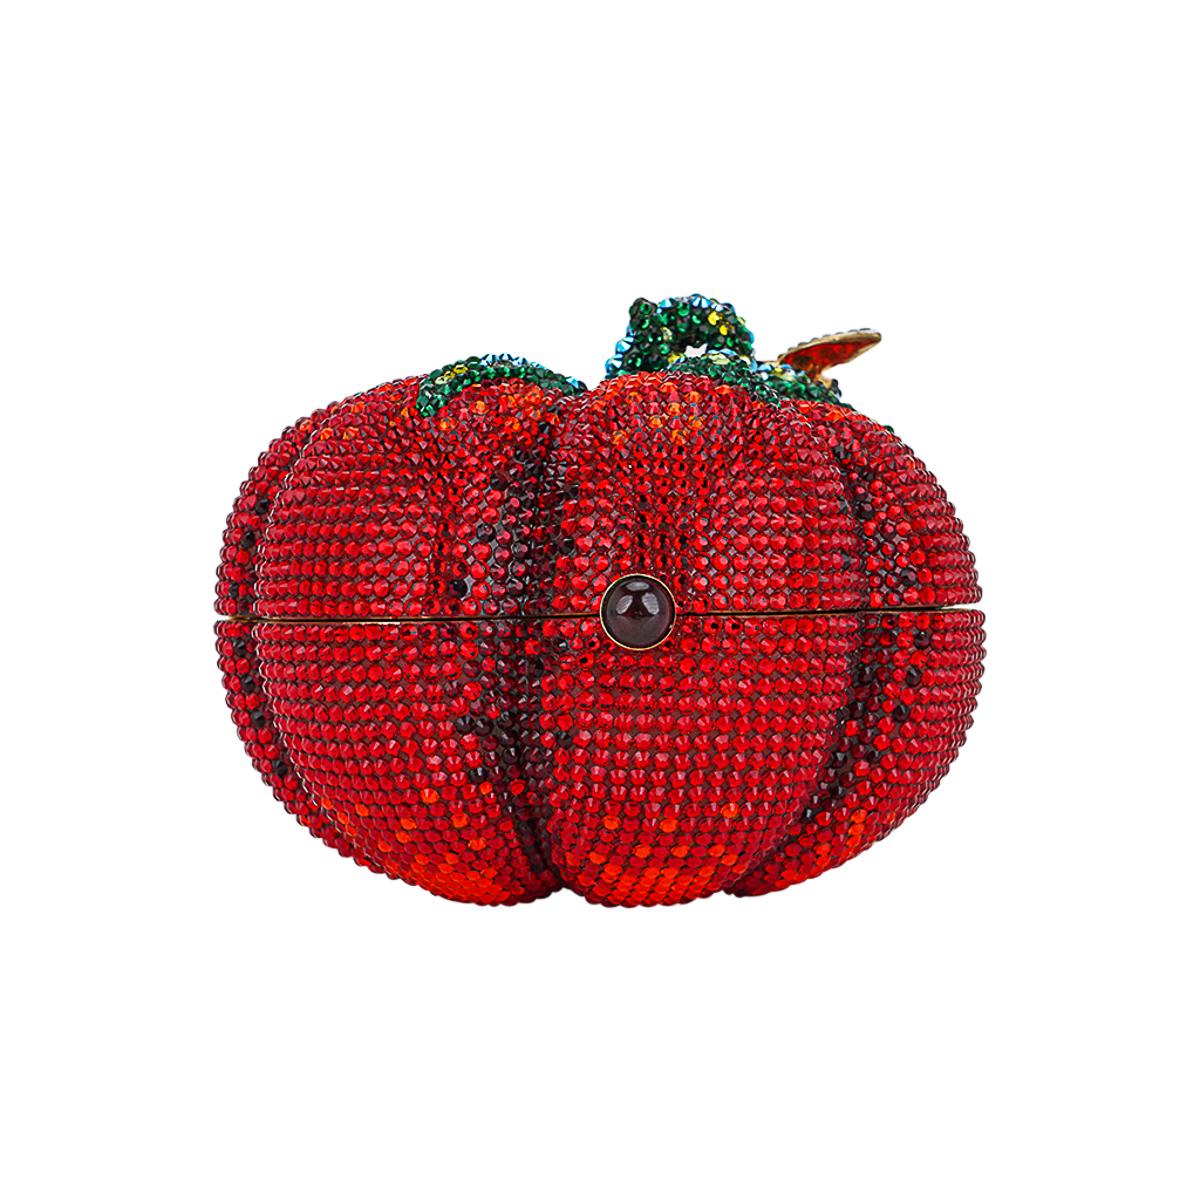 Judith Lieber Tomato Heirloom Minaudiere Limited Edition Bag 5